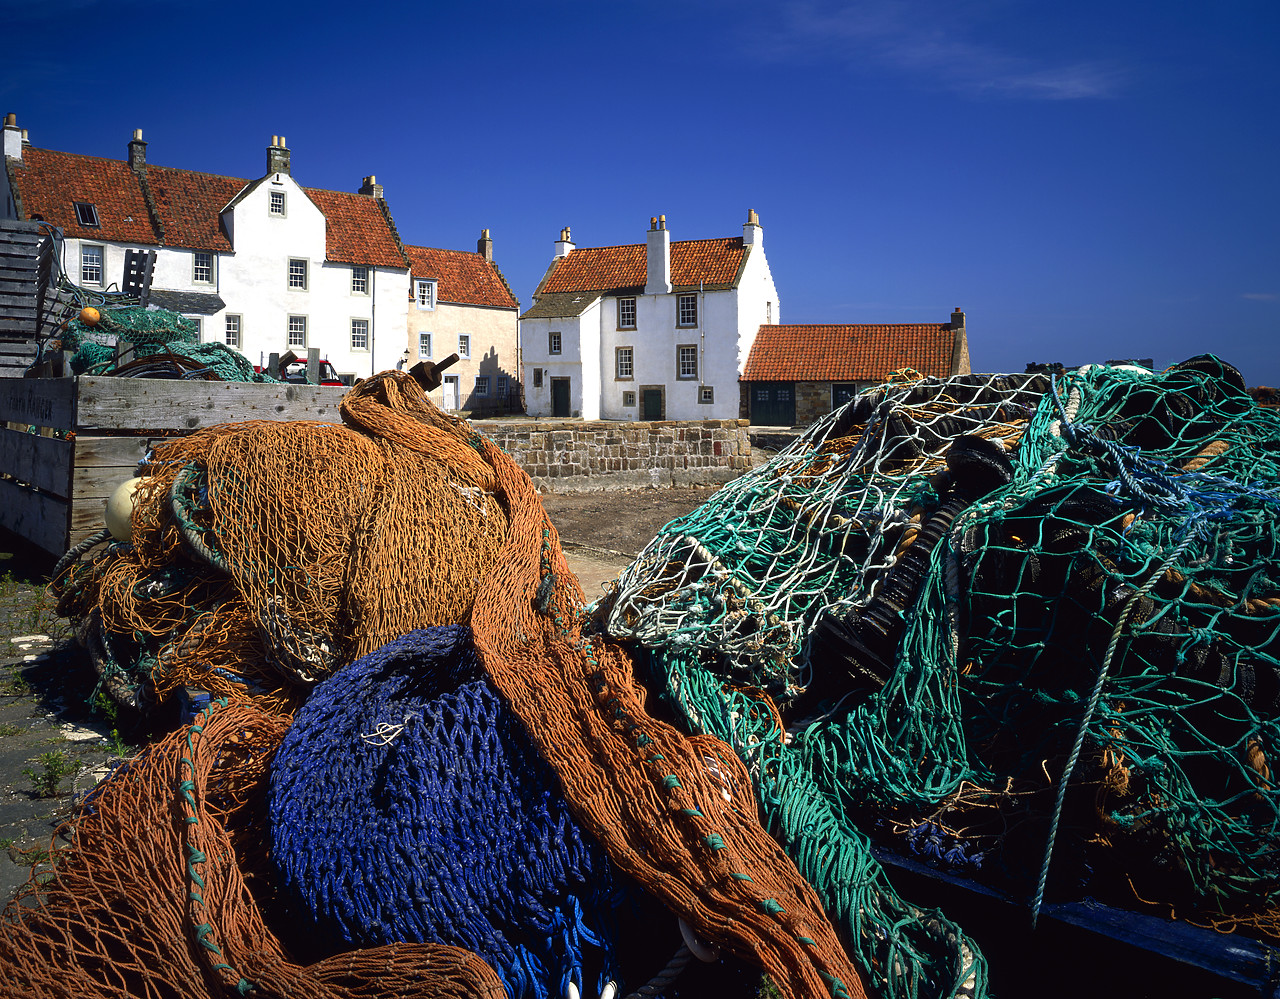 #970383-1 - Fishing Nets & Cottages, Pittenweem, Fife, Scotland